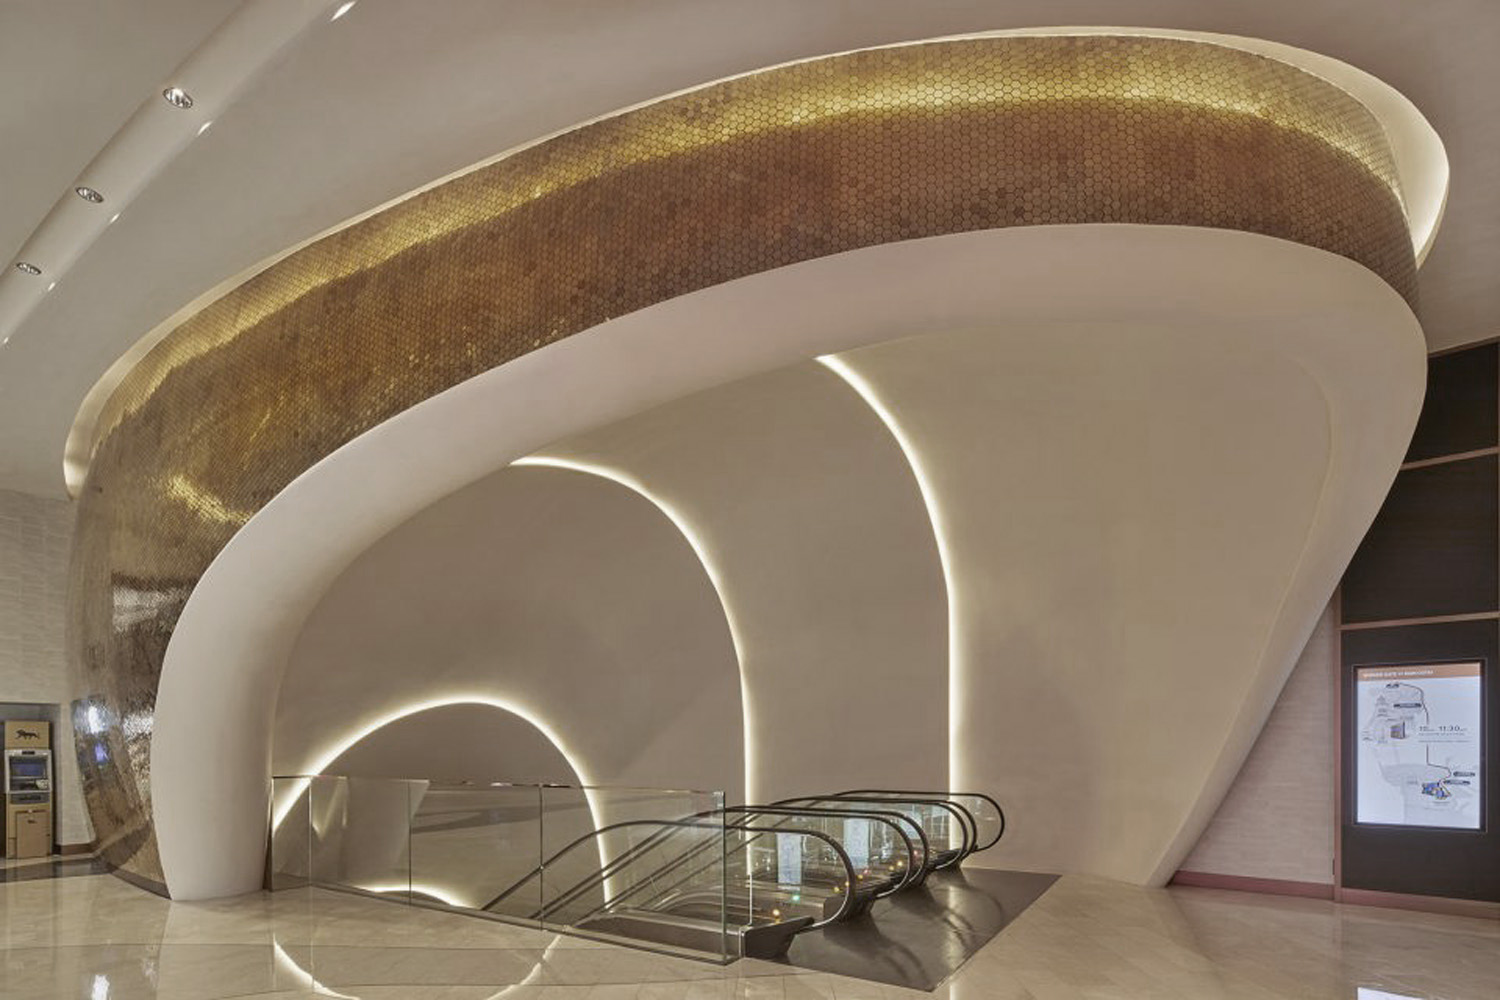 Elevator space design of hotel cinema hall